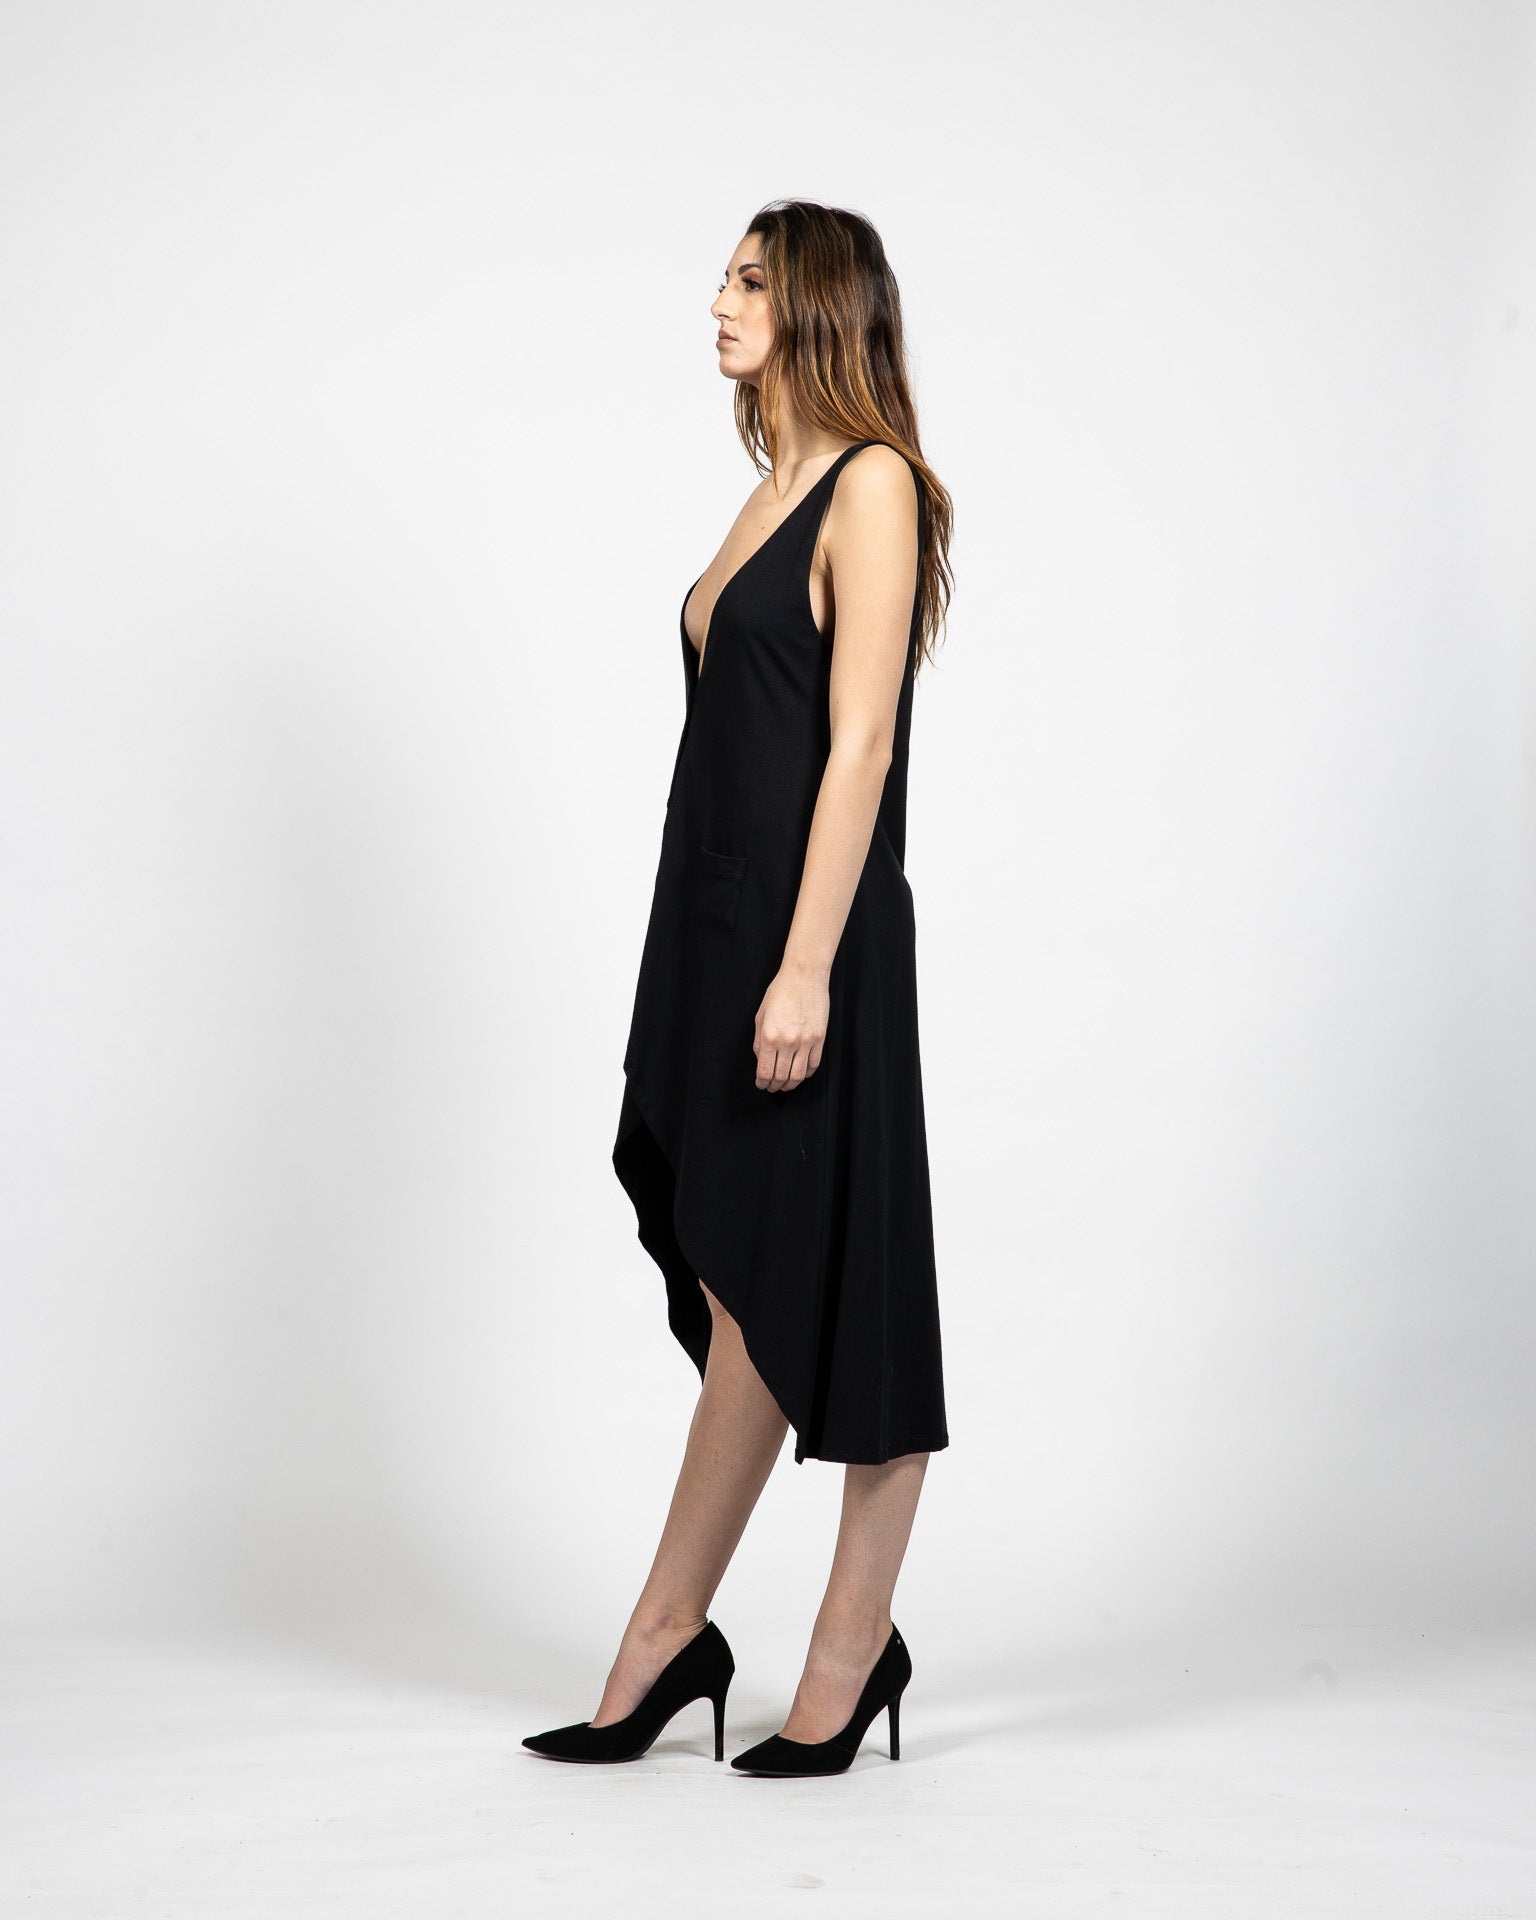 Deep V – Neckline Buttoned Black Dress - Side View - Samuel Vartan